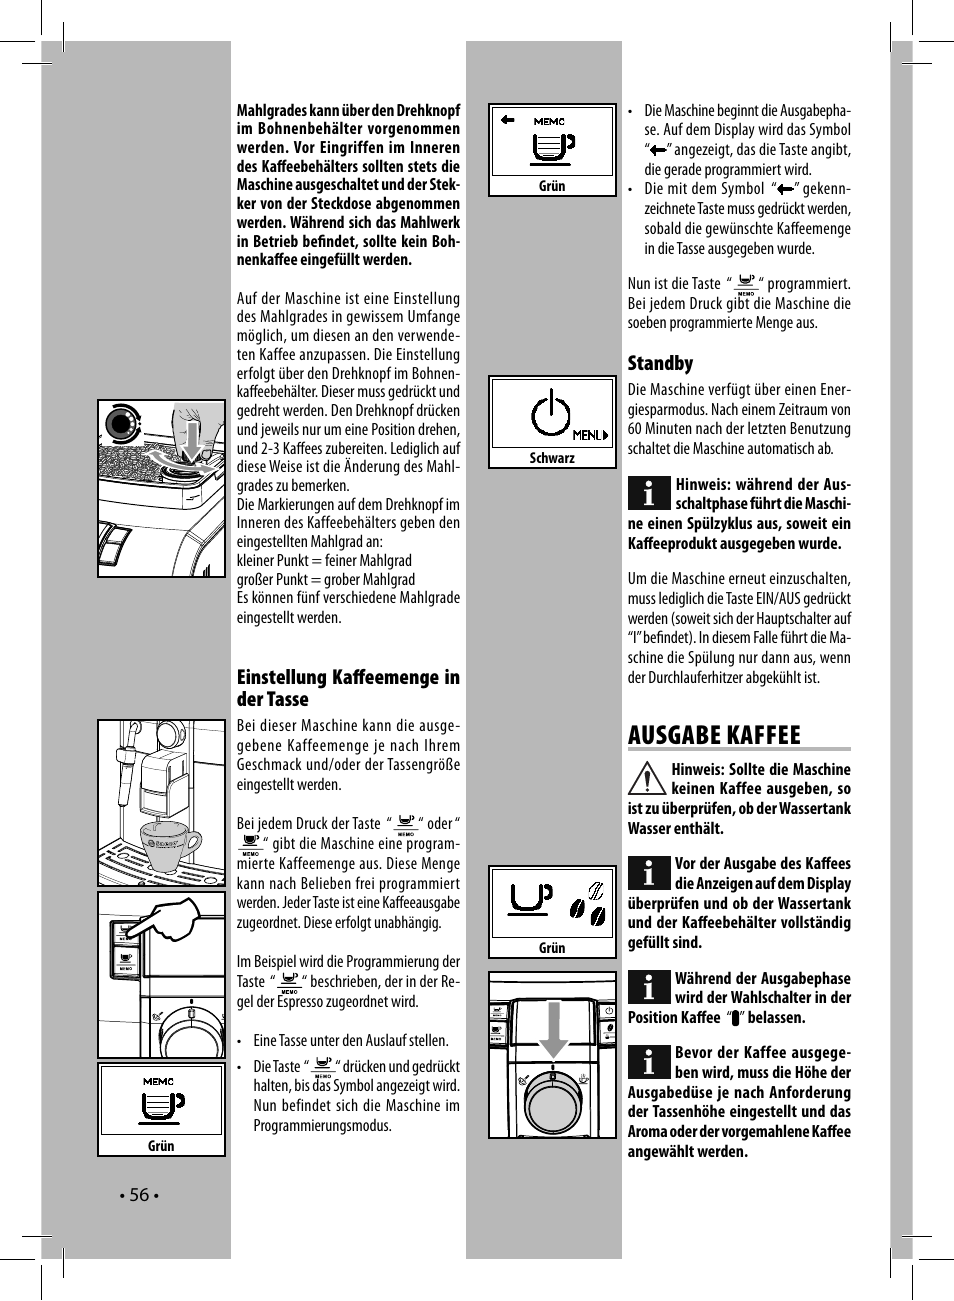 Ausgabe kaffee, Standby, Einstellung kaﬀ eemenge in der tasse | Philips  Saeco Syntia Kaffeevollautomat User Manual | Page 56 / 96 | Original mode